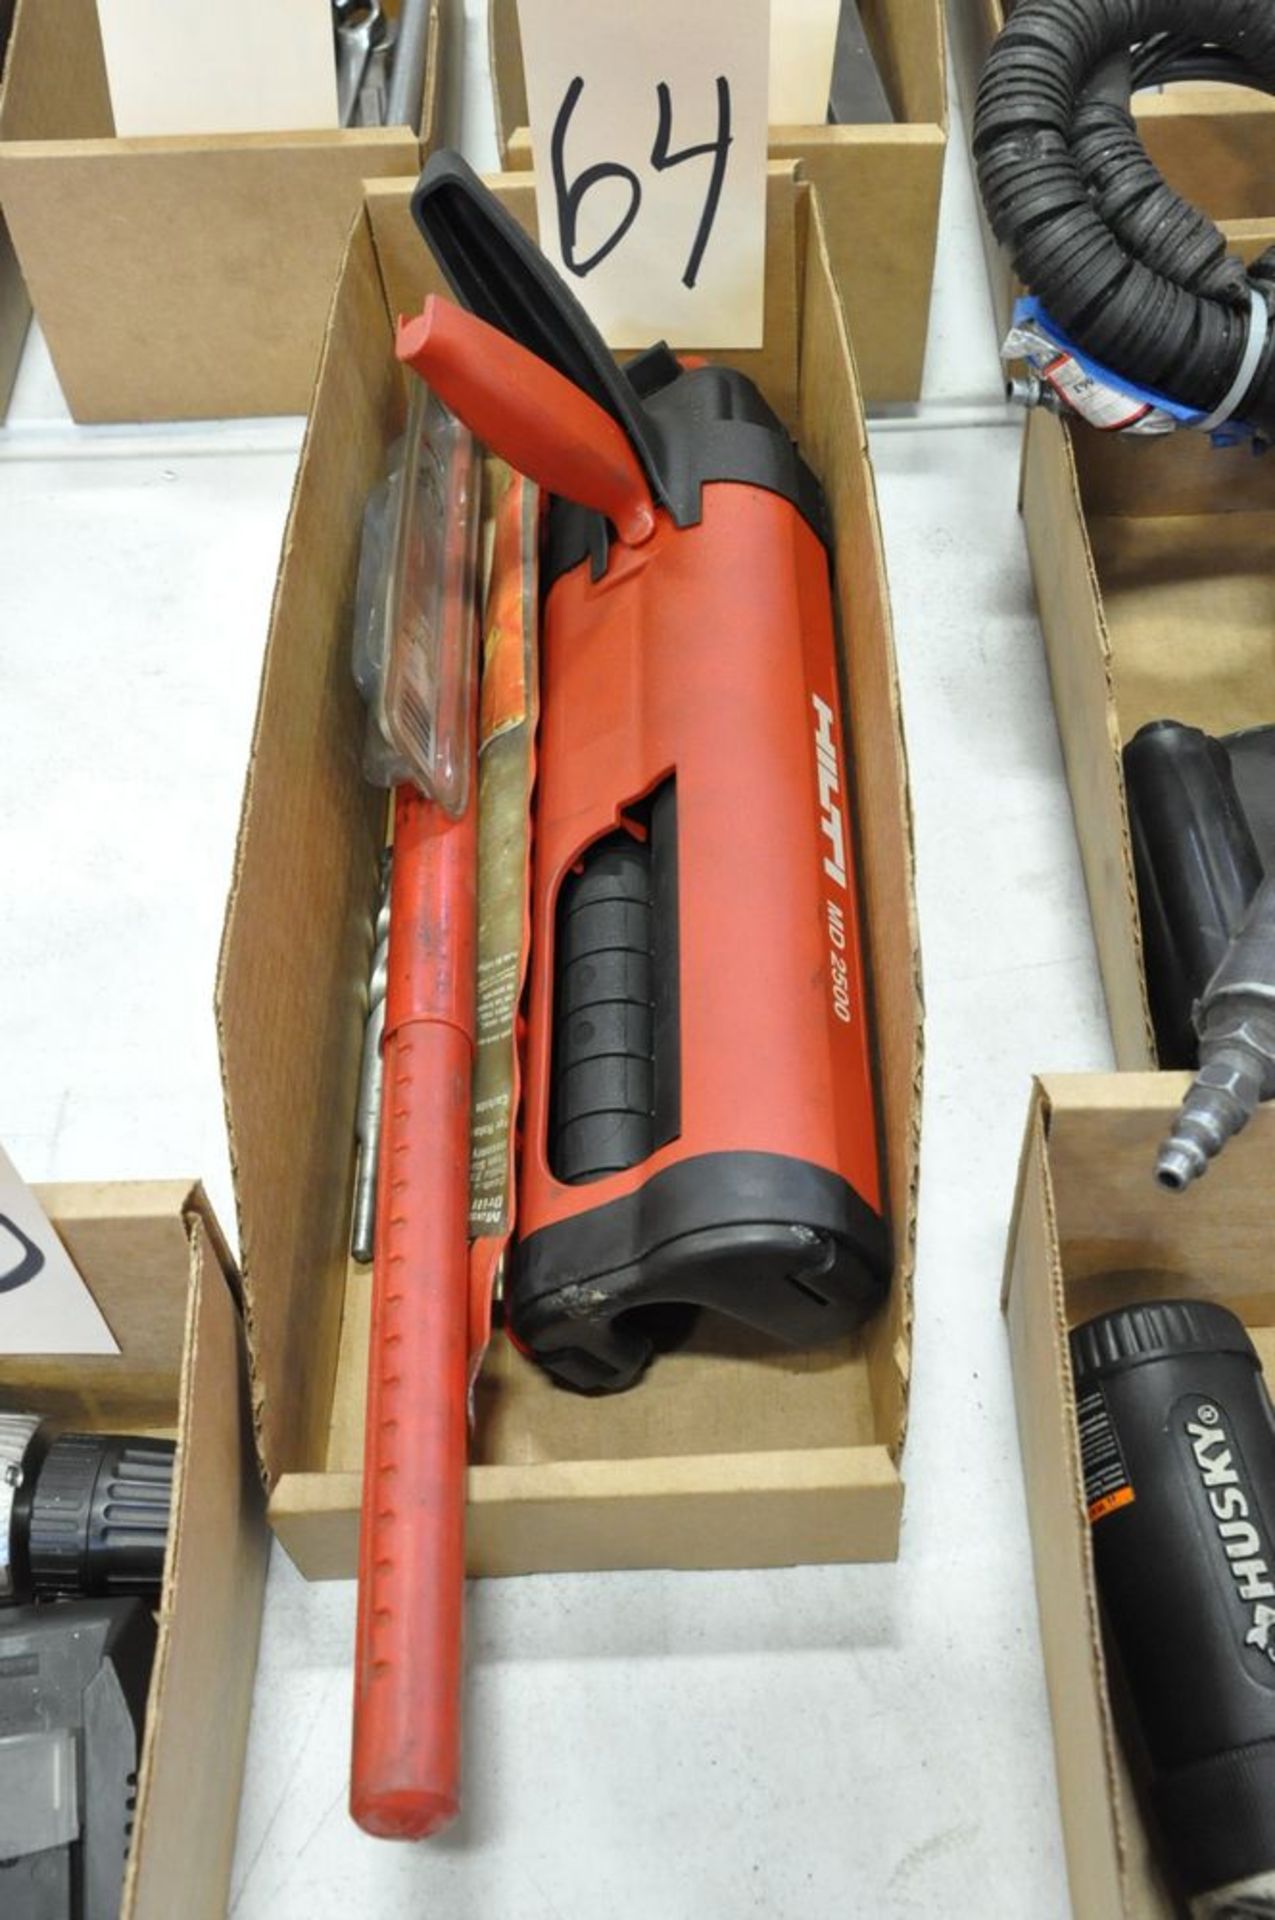 Hilti MD2500, 2-Part Adhesive Gun and Drill Bits in (1) Box